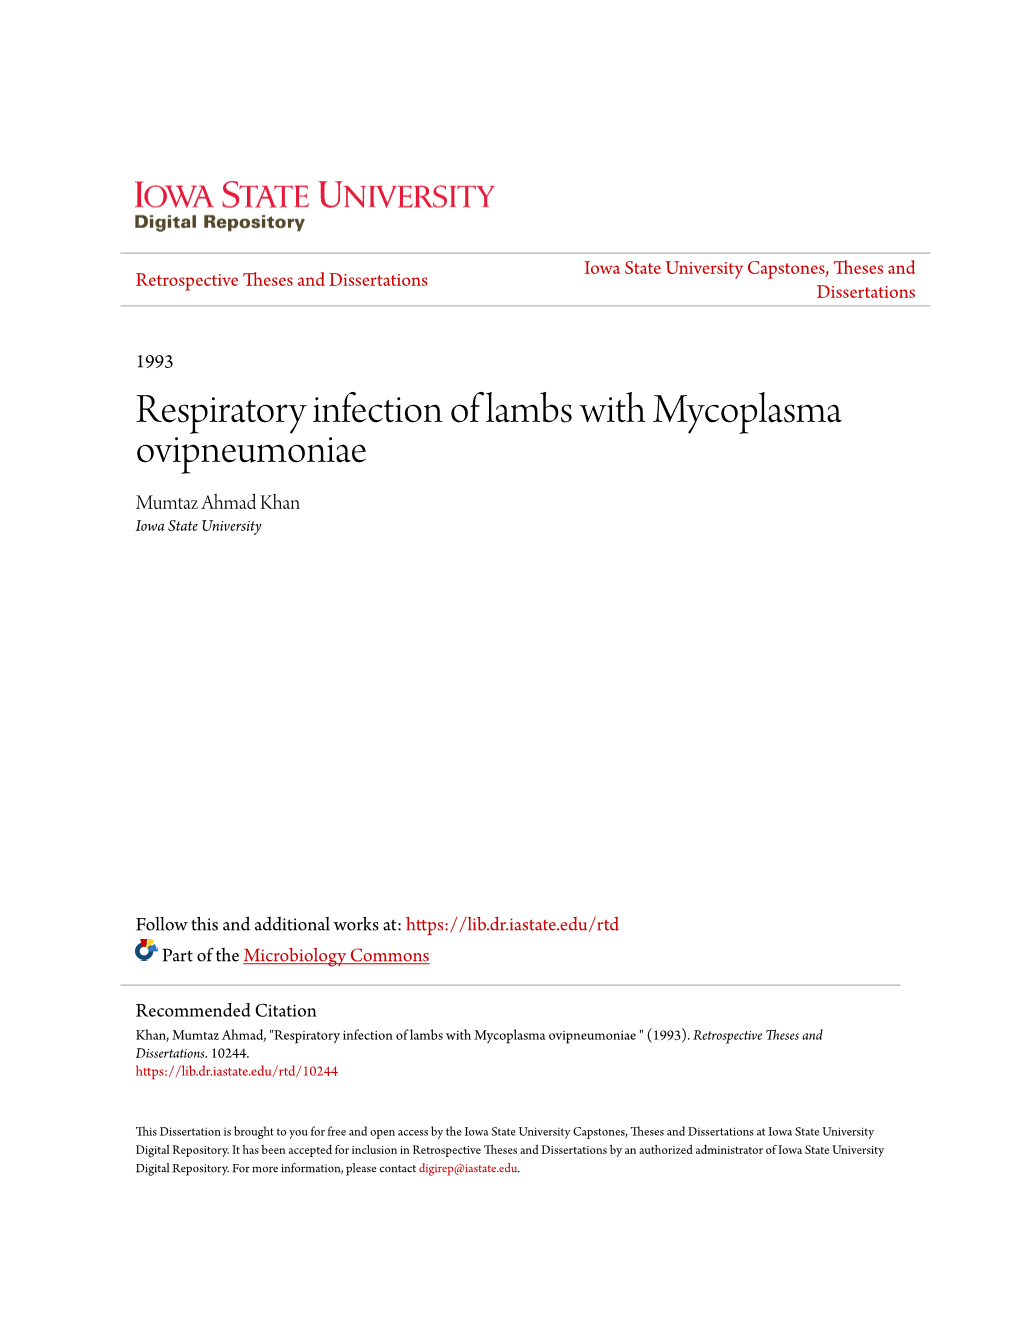 Respiratory Infection of Lambs with Mycoplasma Ovipneumoniae Mumtaz Ahmad Khan Iowa State University